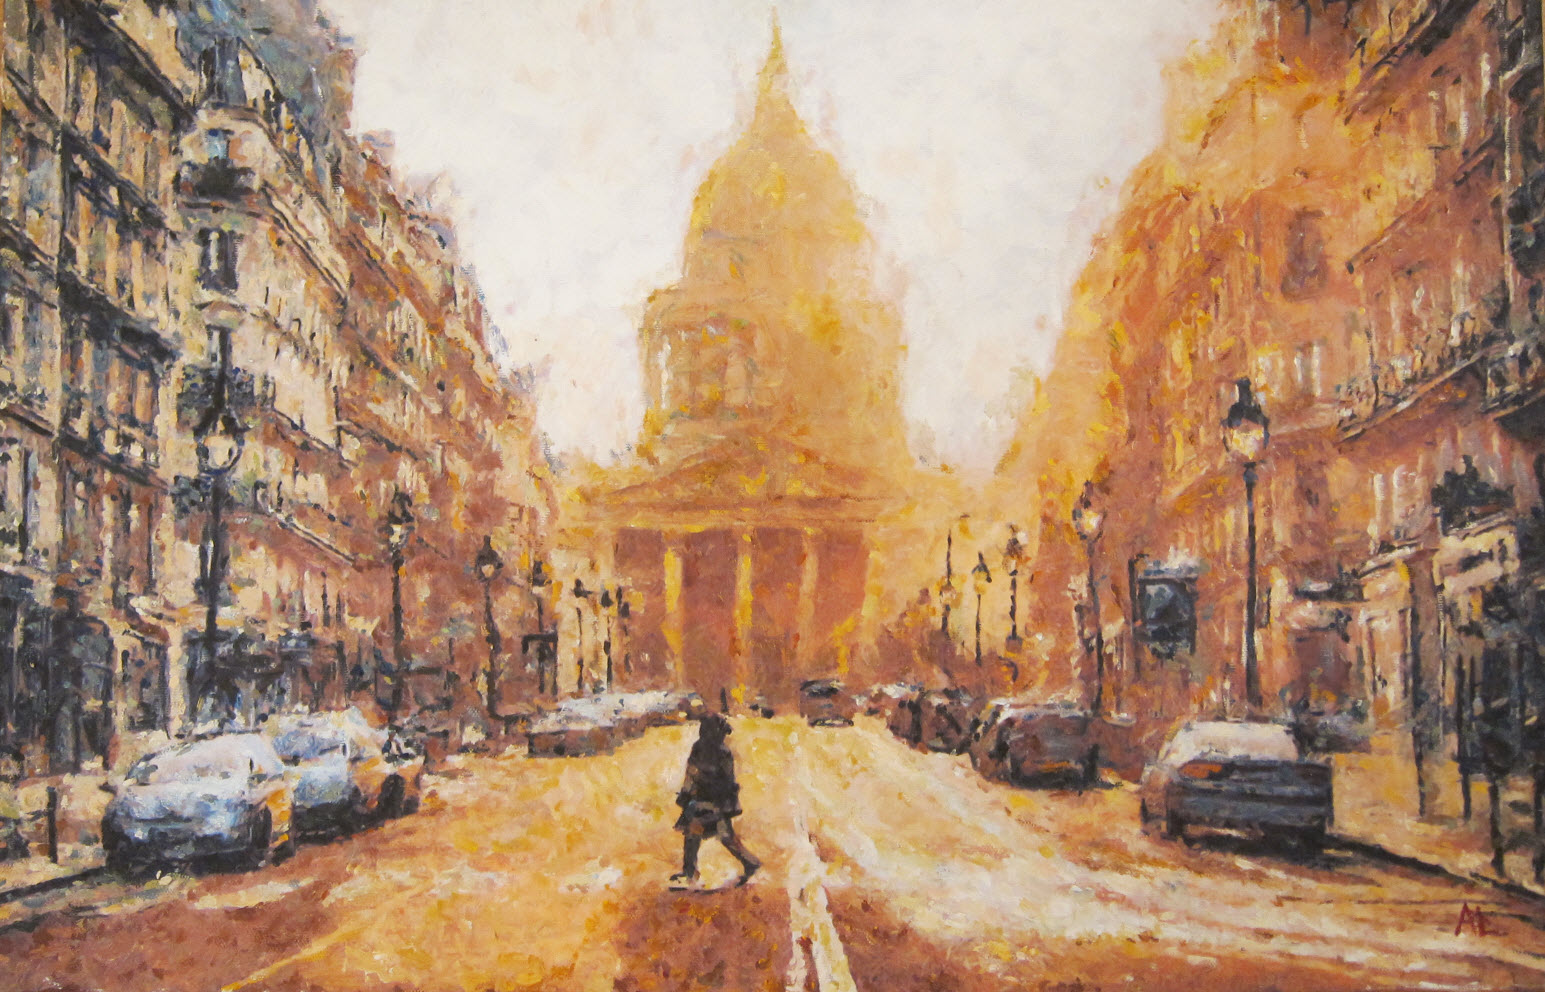 Golden city, A. Lefbard, 60x40 сm, 2015, oil on canvas